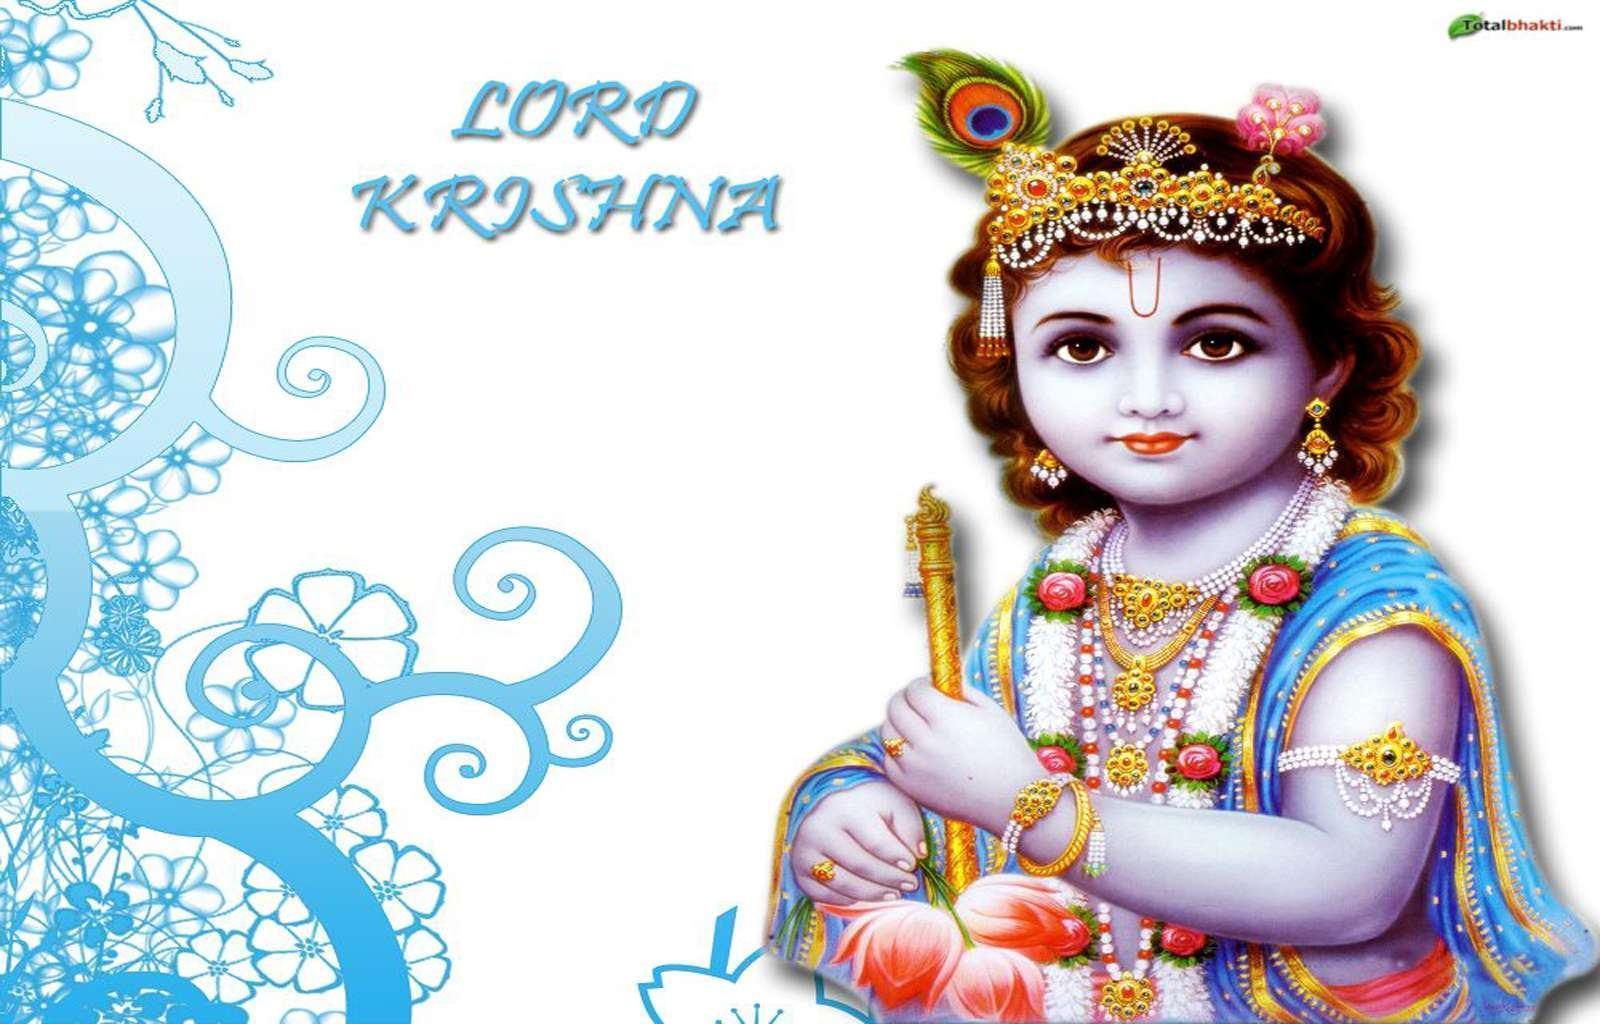 Sri Krishna Image for Janmashtami 2014. Happy Birthday 2015